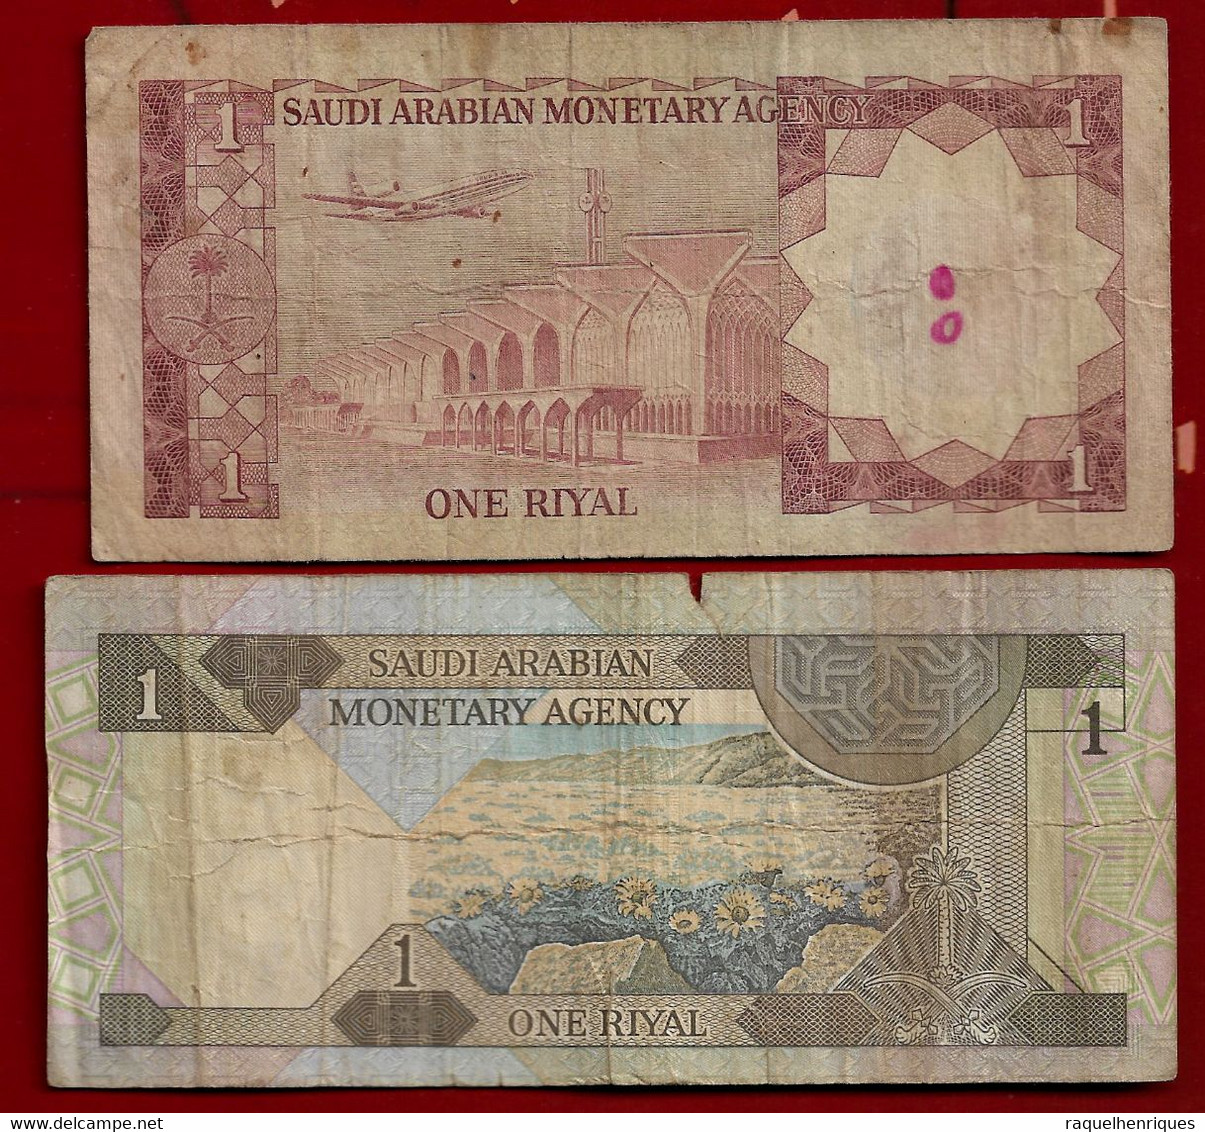 SAUDI ARABIA BANKNOTE - 2 NOTES 1 RIYAL (1984) - (1977) P#21d-16 F (NT#03) - Saudi Arabia